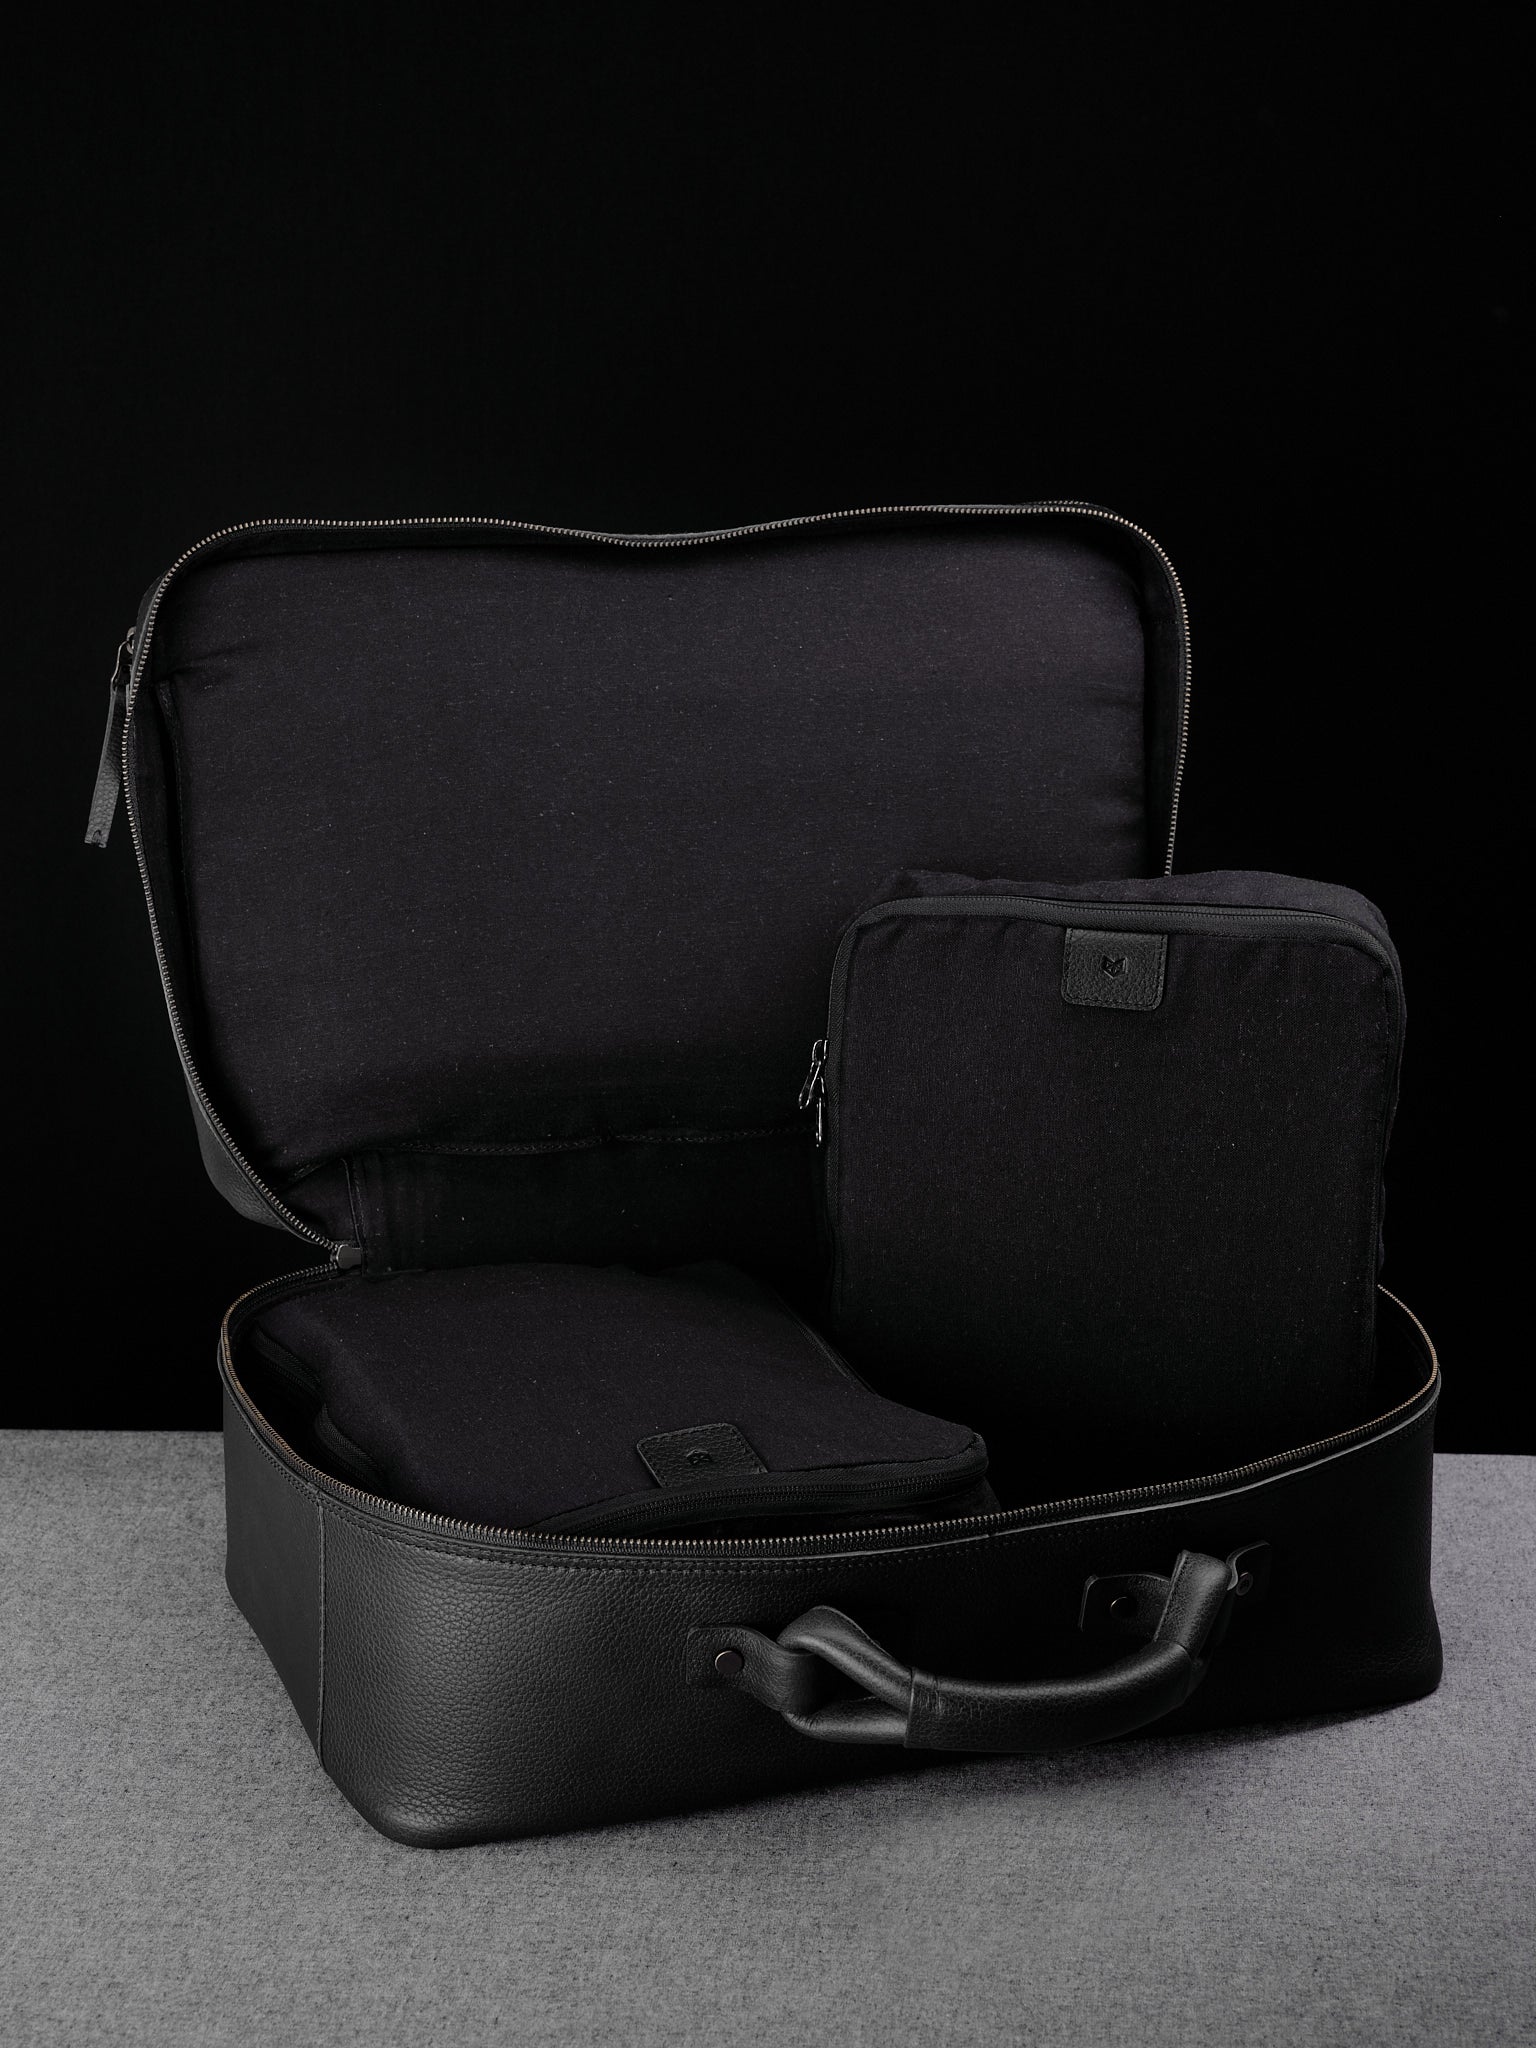 Detachable Shoulder Strap. Travel Duffle Bag. Leather Weekender Bag Black by Capra